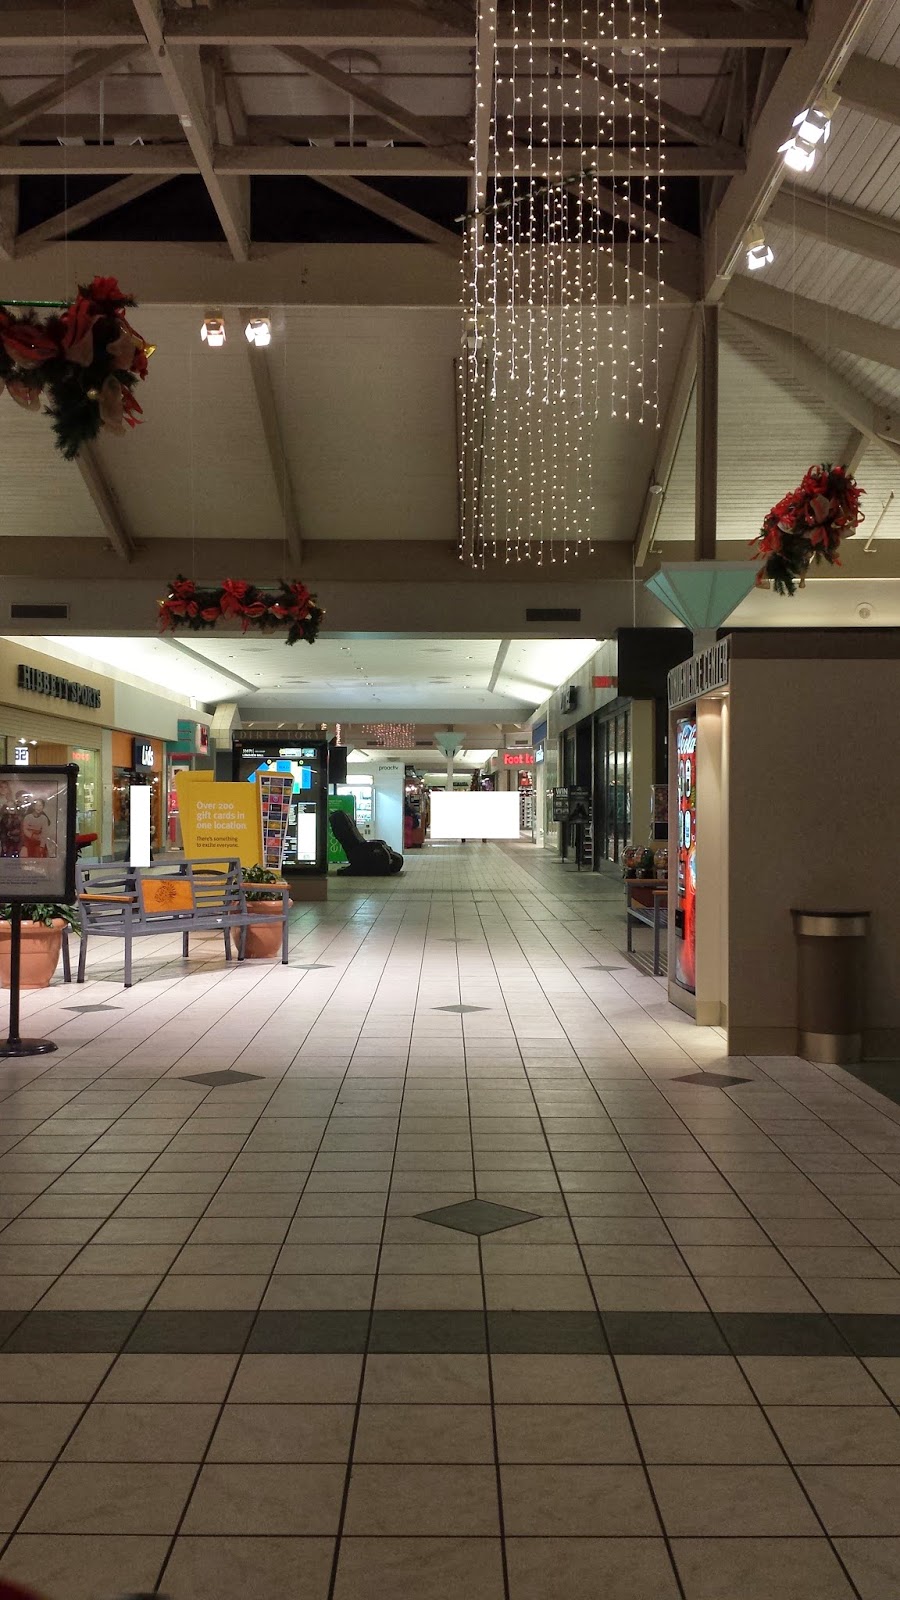 ... Texas Southern Malls and Retail: Longview Mall, Longview Texas 2013